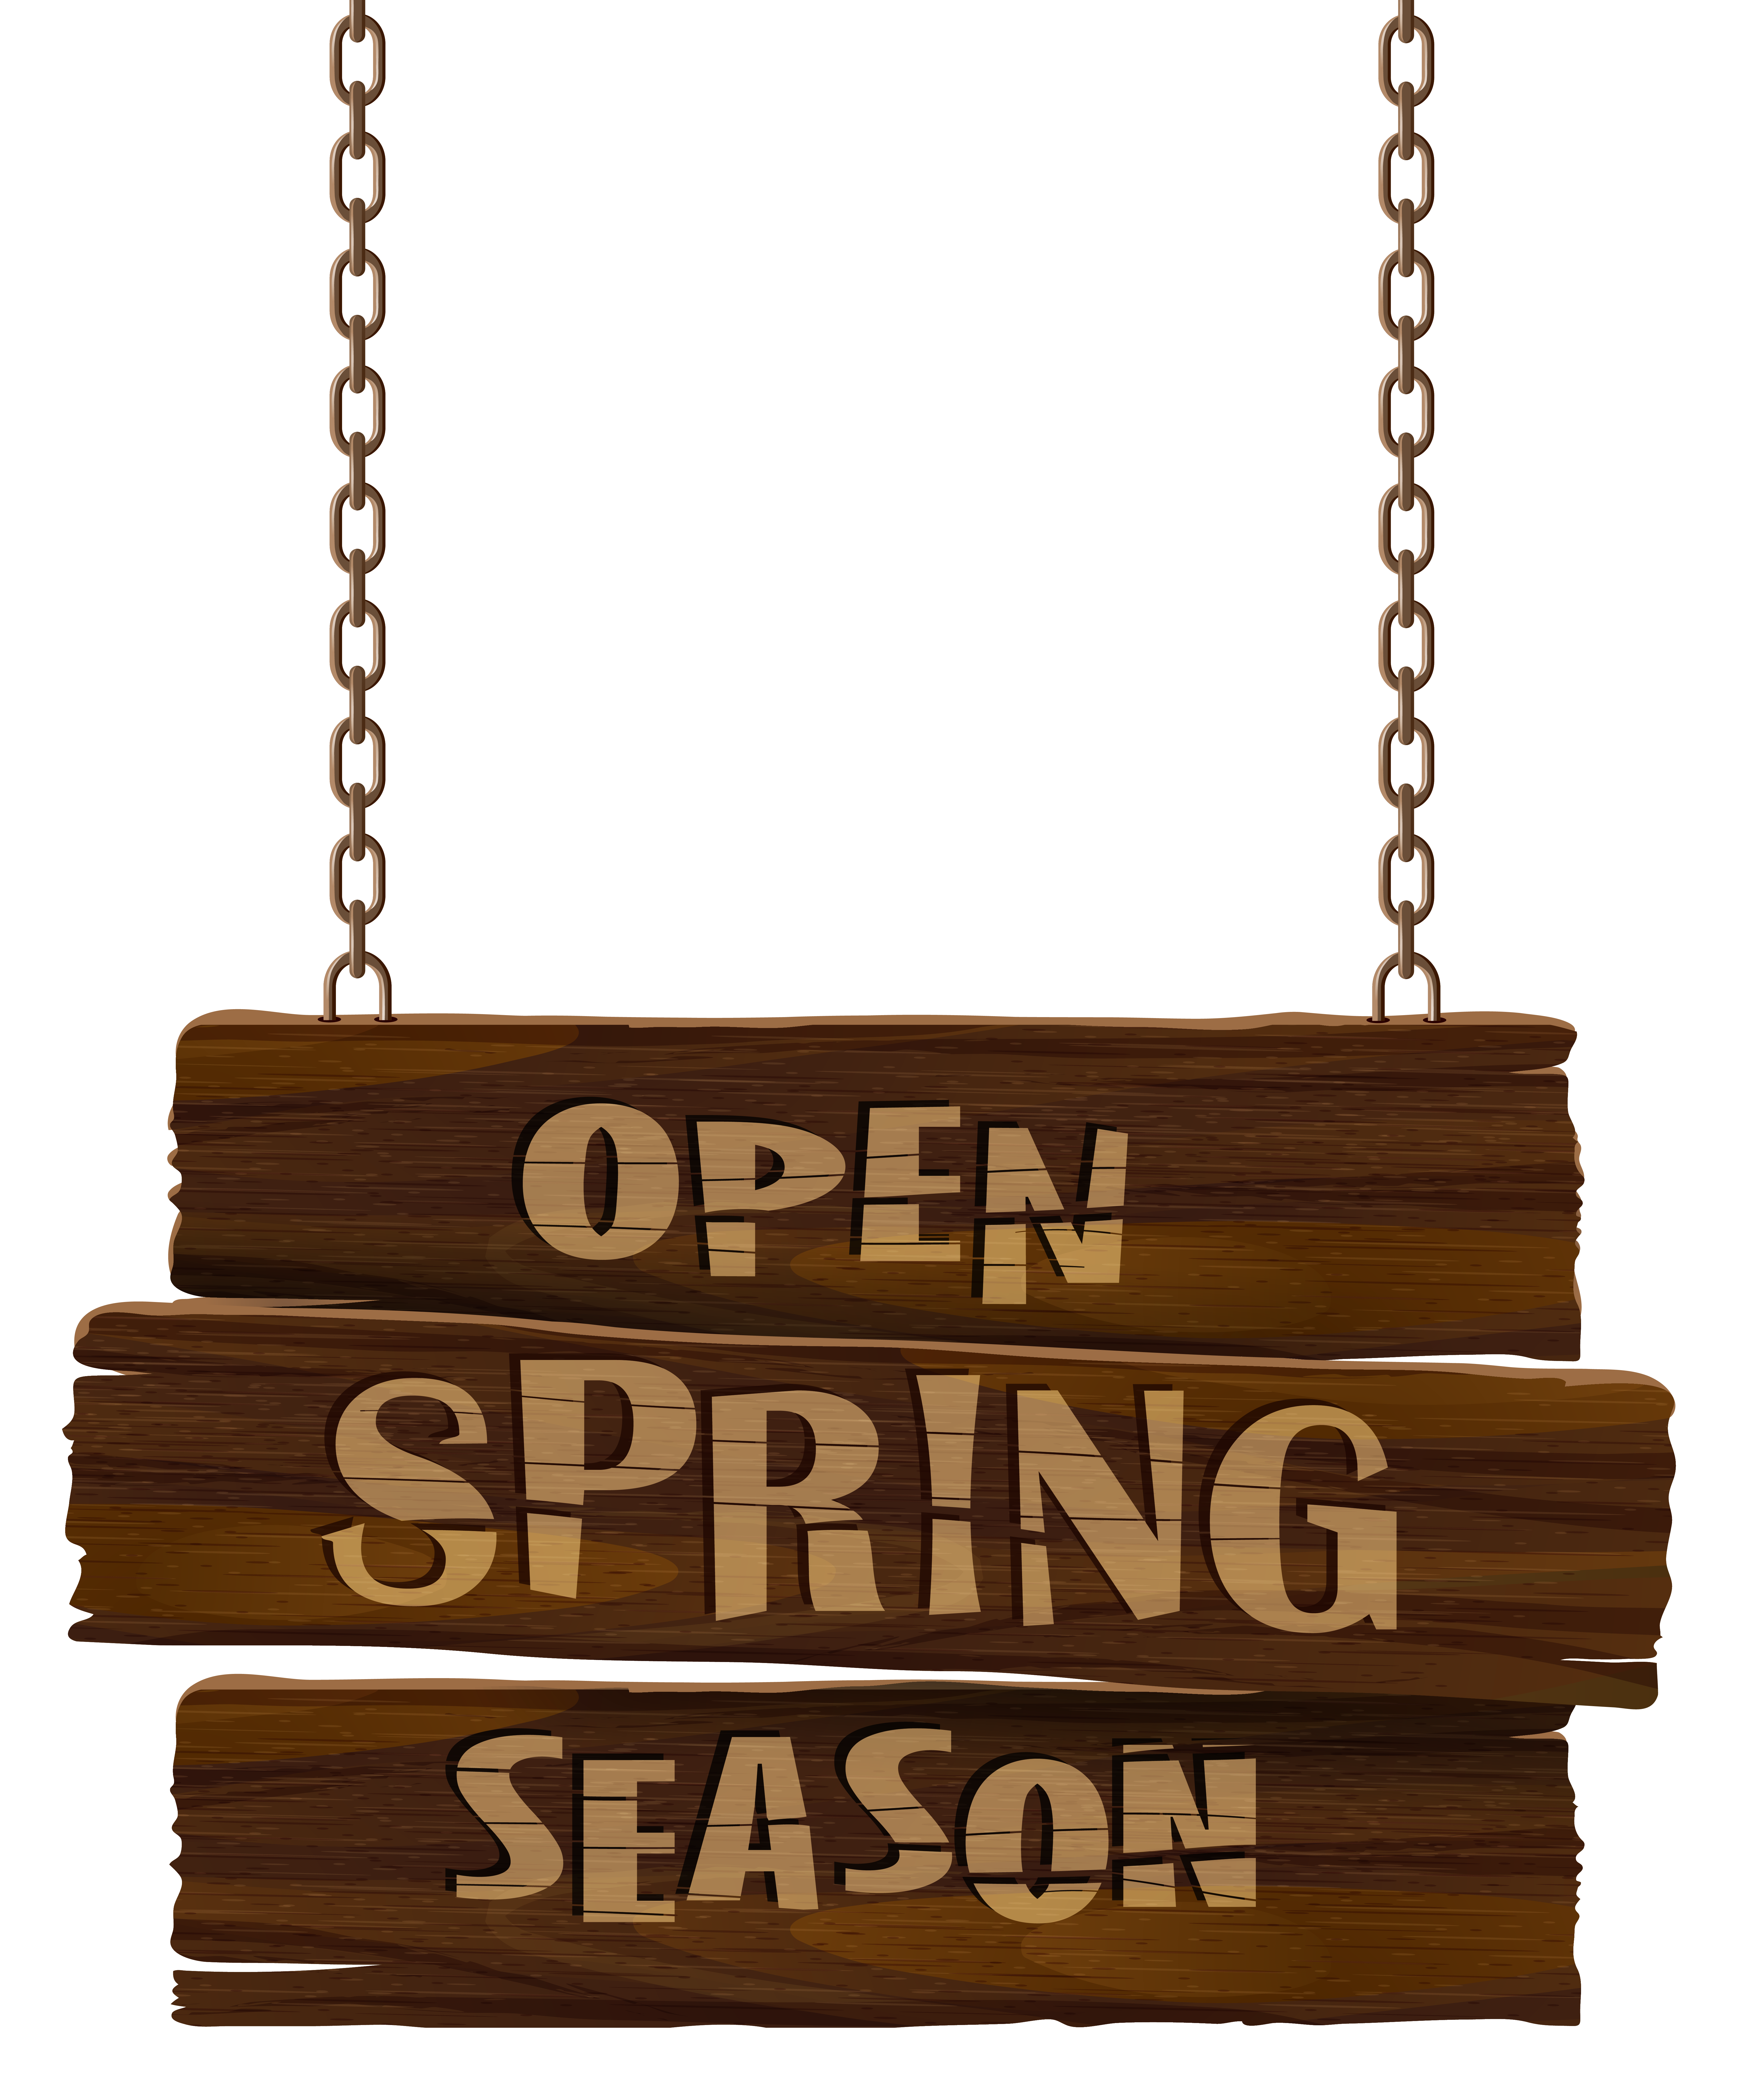 Open Spring Season Sign Transparent PNG Clip Art Image ...